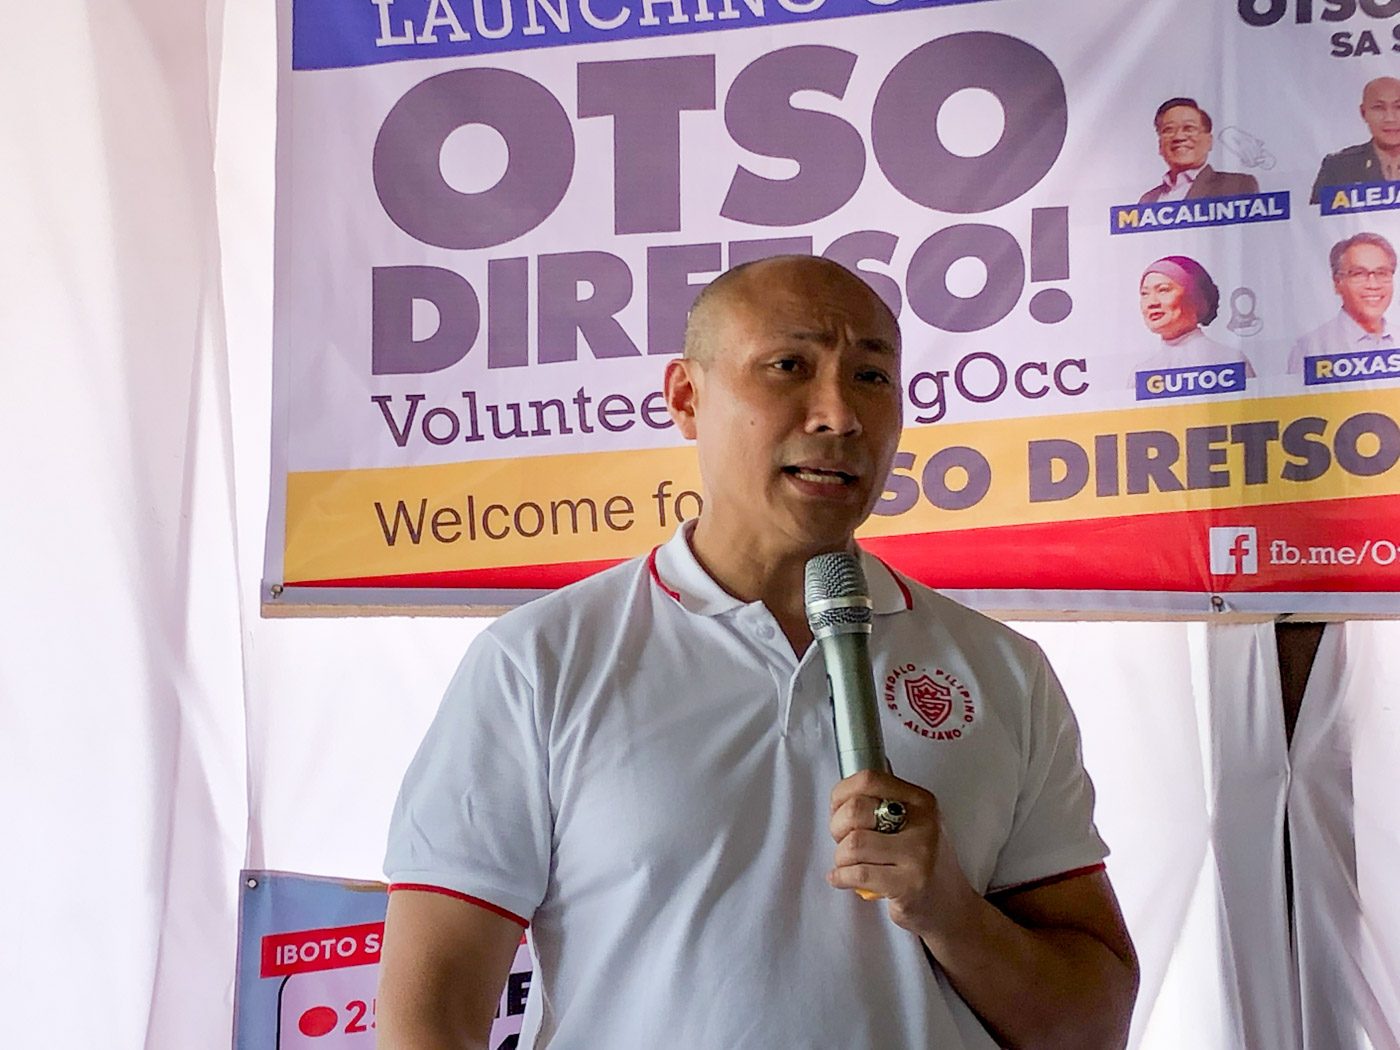 Otso Diretso bets want to restore Negros Island Region